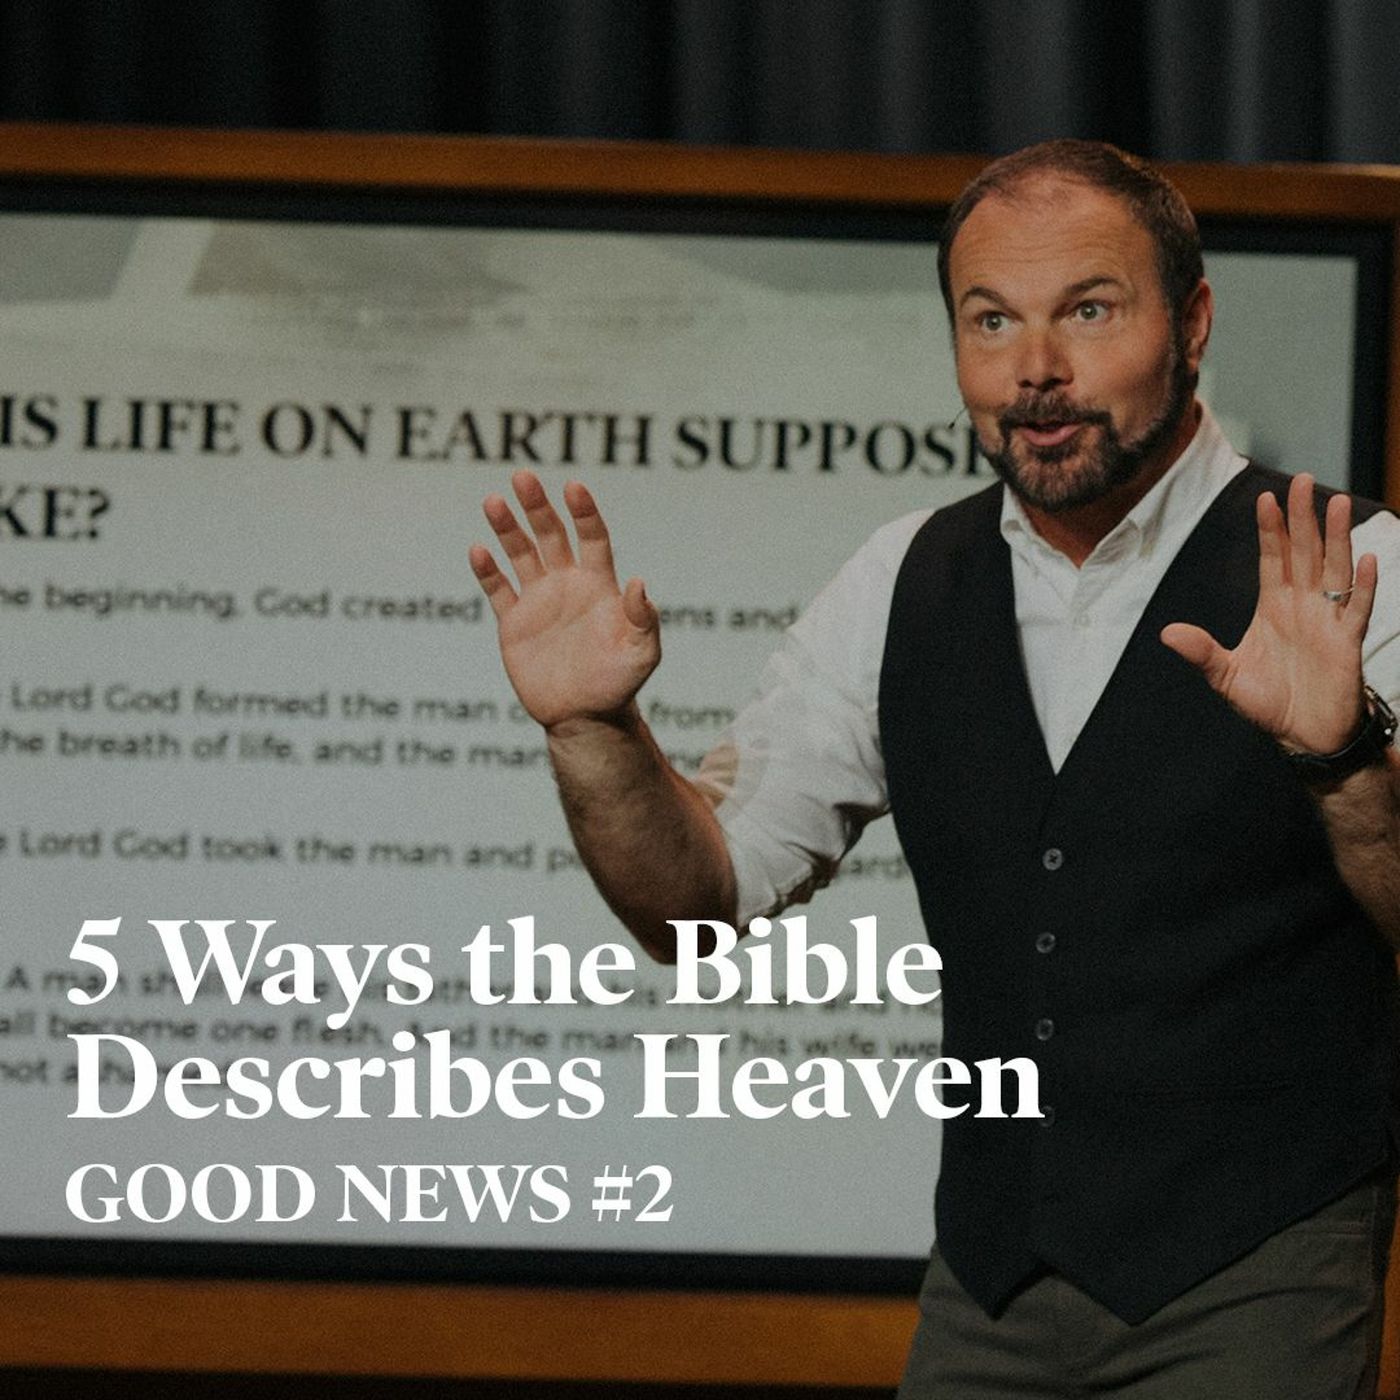 Good News #2 - 5 Ways the Bible Describes Heaven